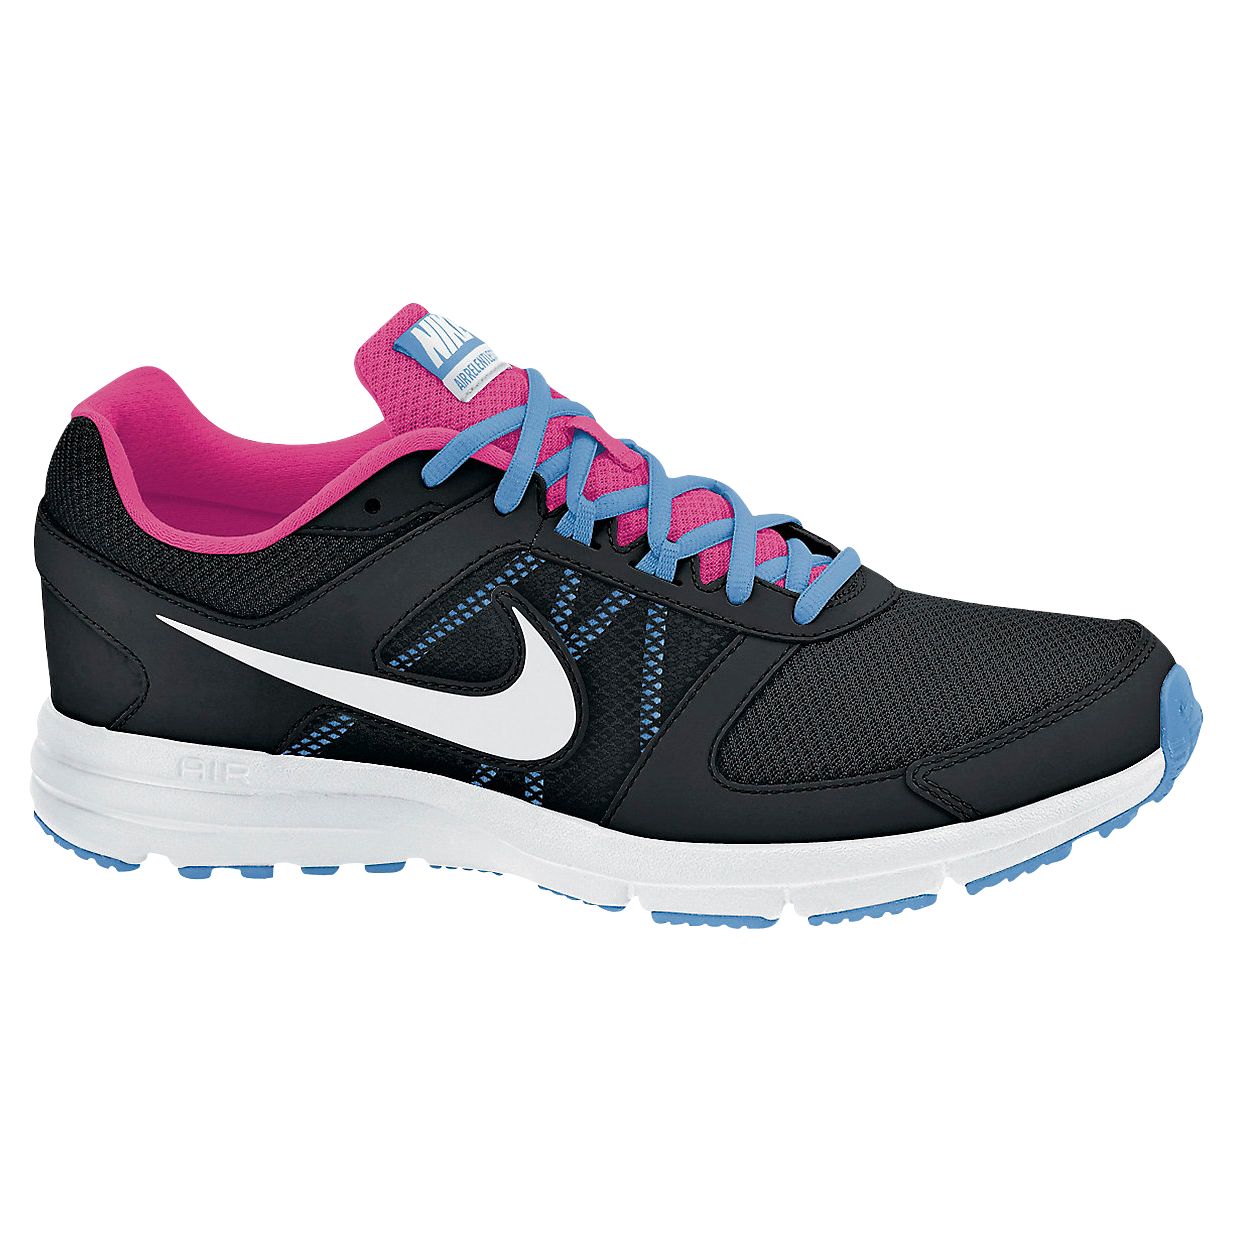 Nike Women's Air Relentless 3 Running Shoes, Black/White